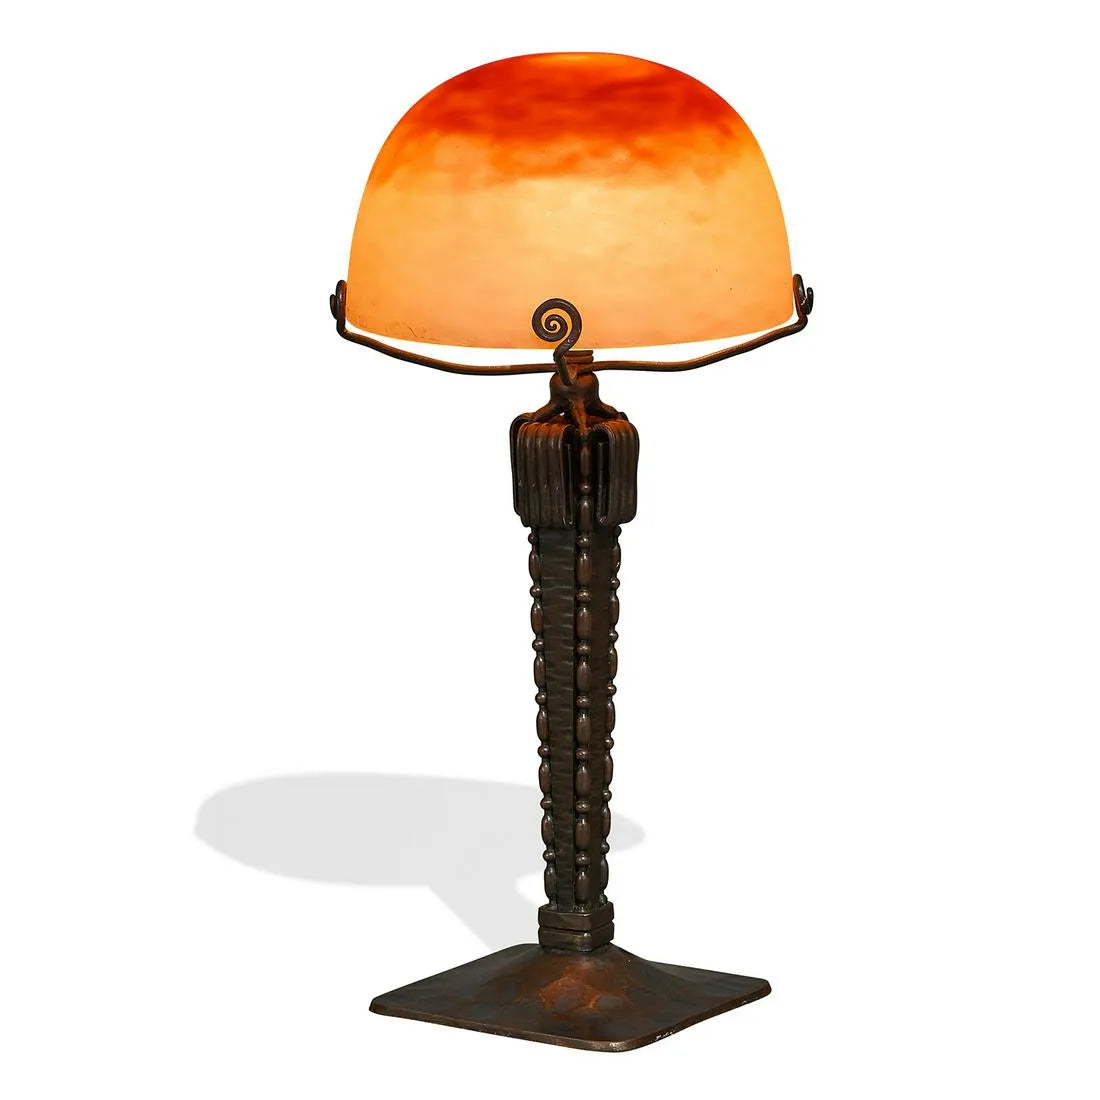 AL2-013: EARLY 20TH CENTURY FRENCH ART DECO DAUM BOUDOIR LAMP